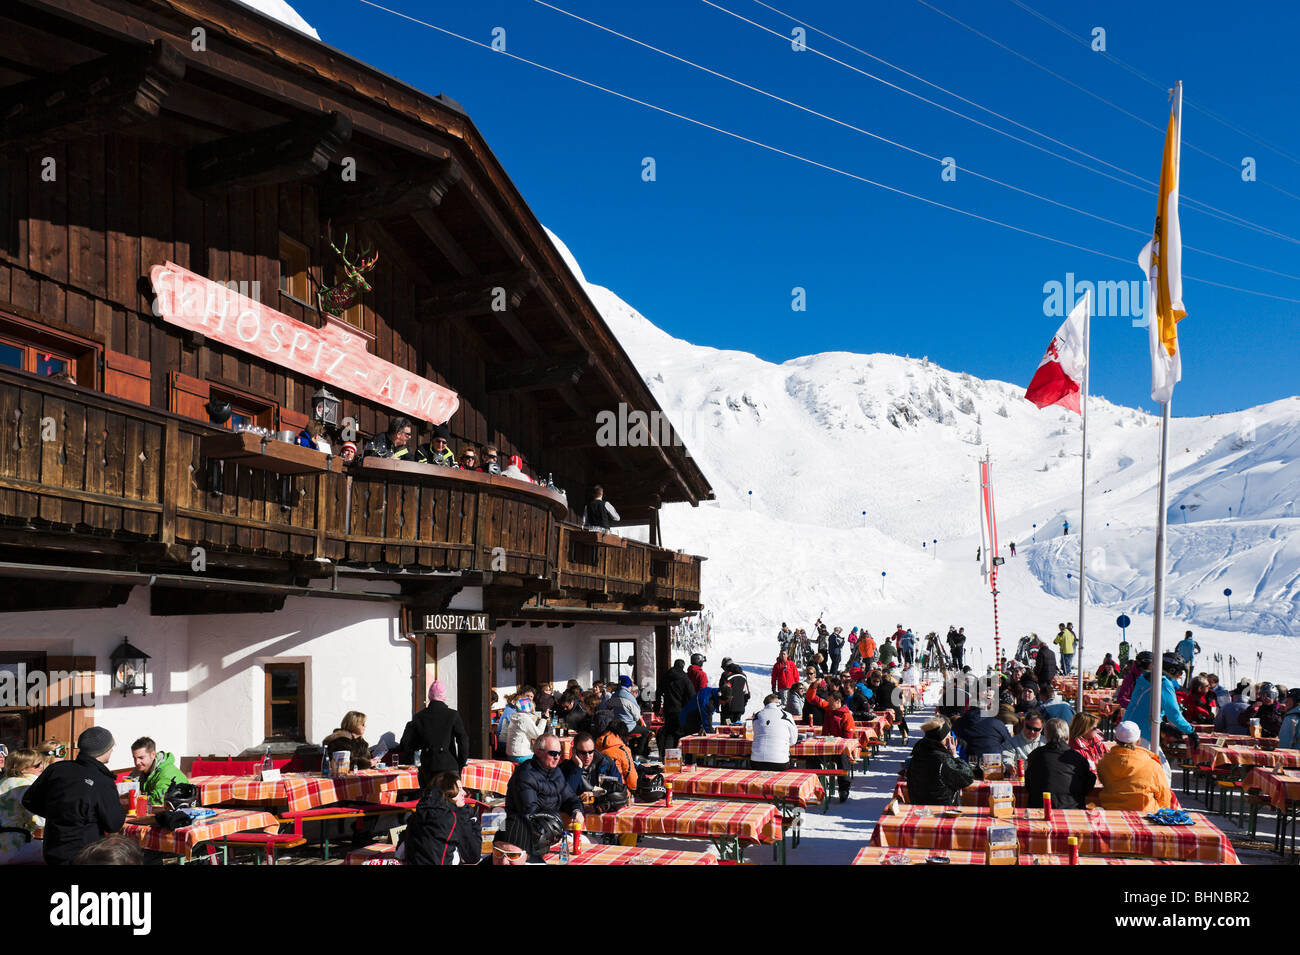 The Hospiz Alm mountain restaurant at the bottom of the slopes in St Christoph, Arlberg ski region, Vorarlberg, Austria Stock Photo